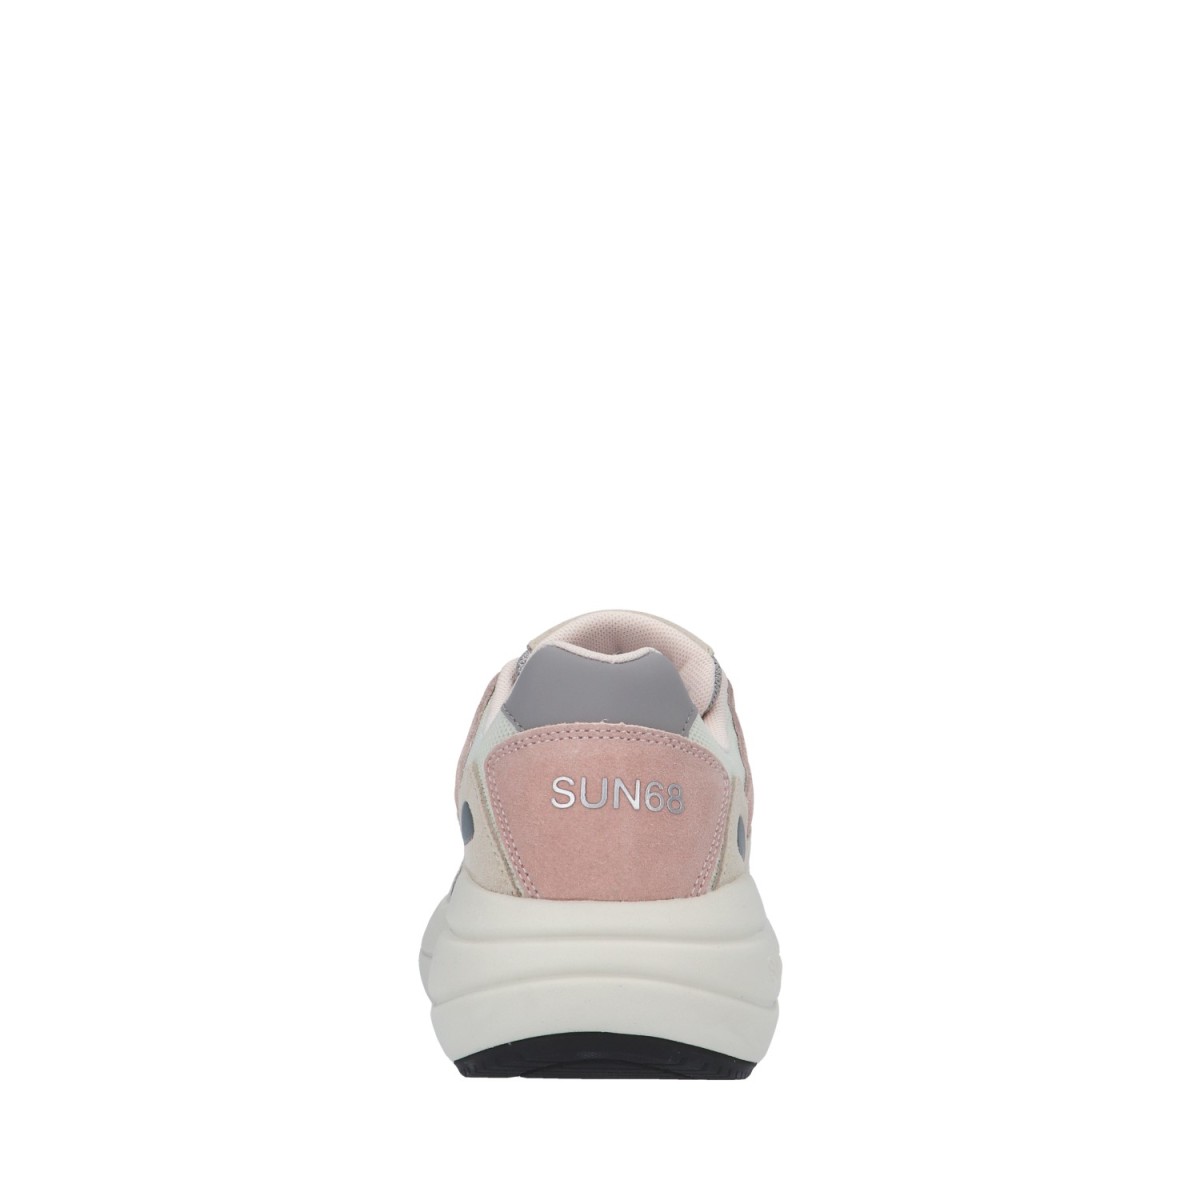 Sun68 Sneaker Bianco panna Gomma Z34219